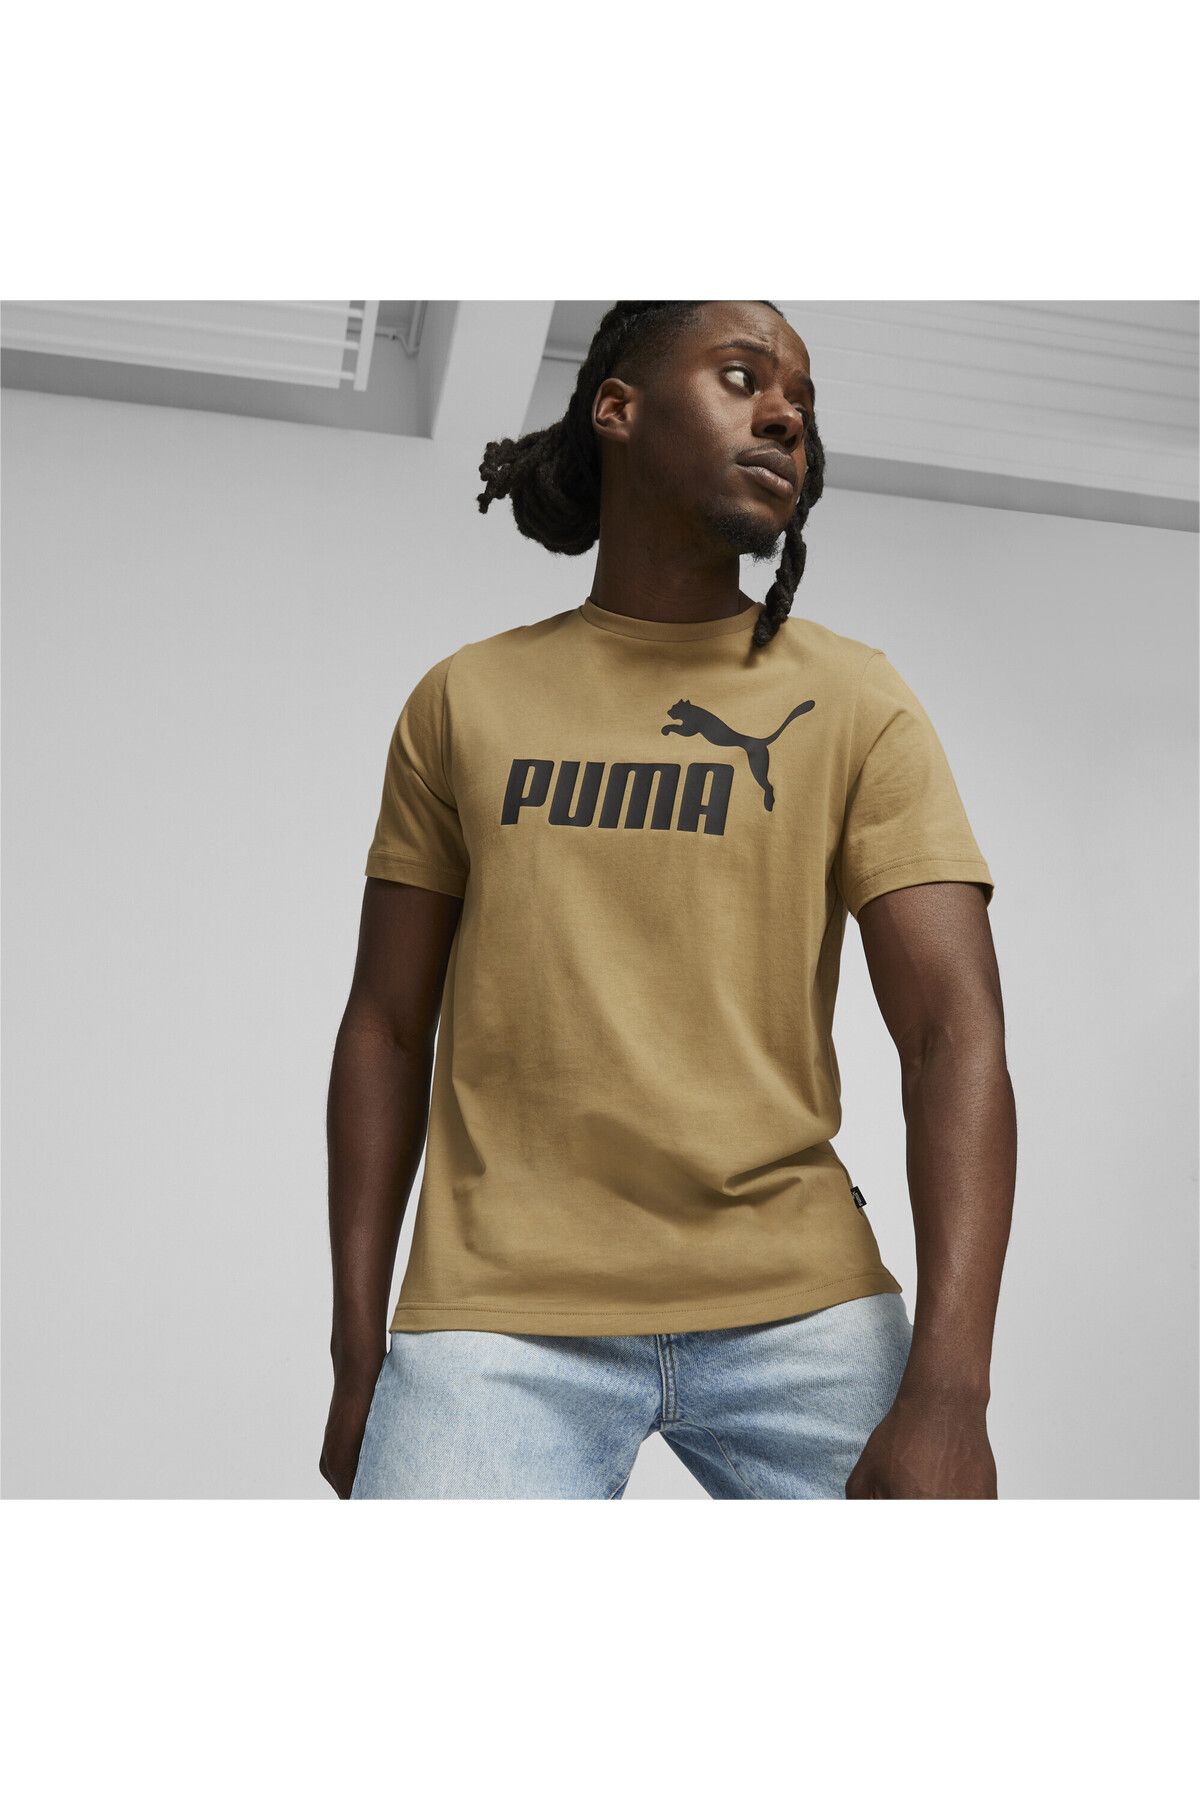 Puma T-Shirt - Beige - Regular fit - Trendyol